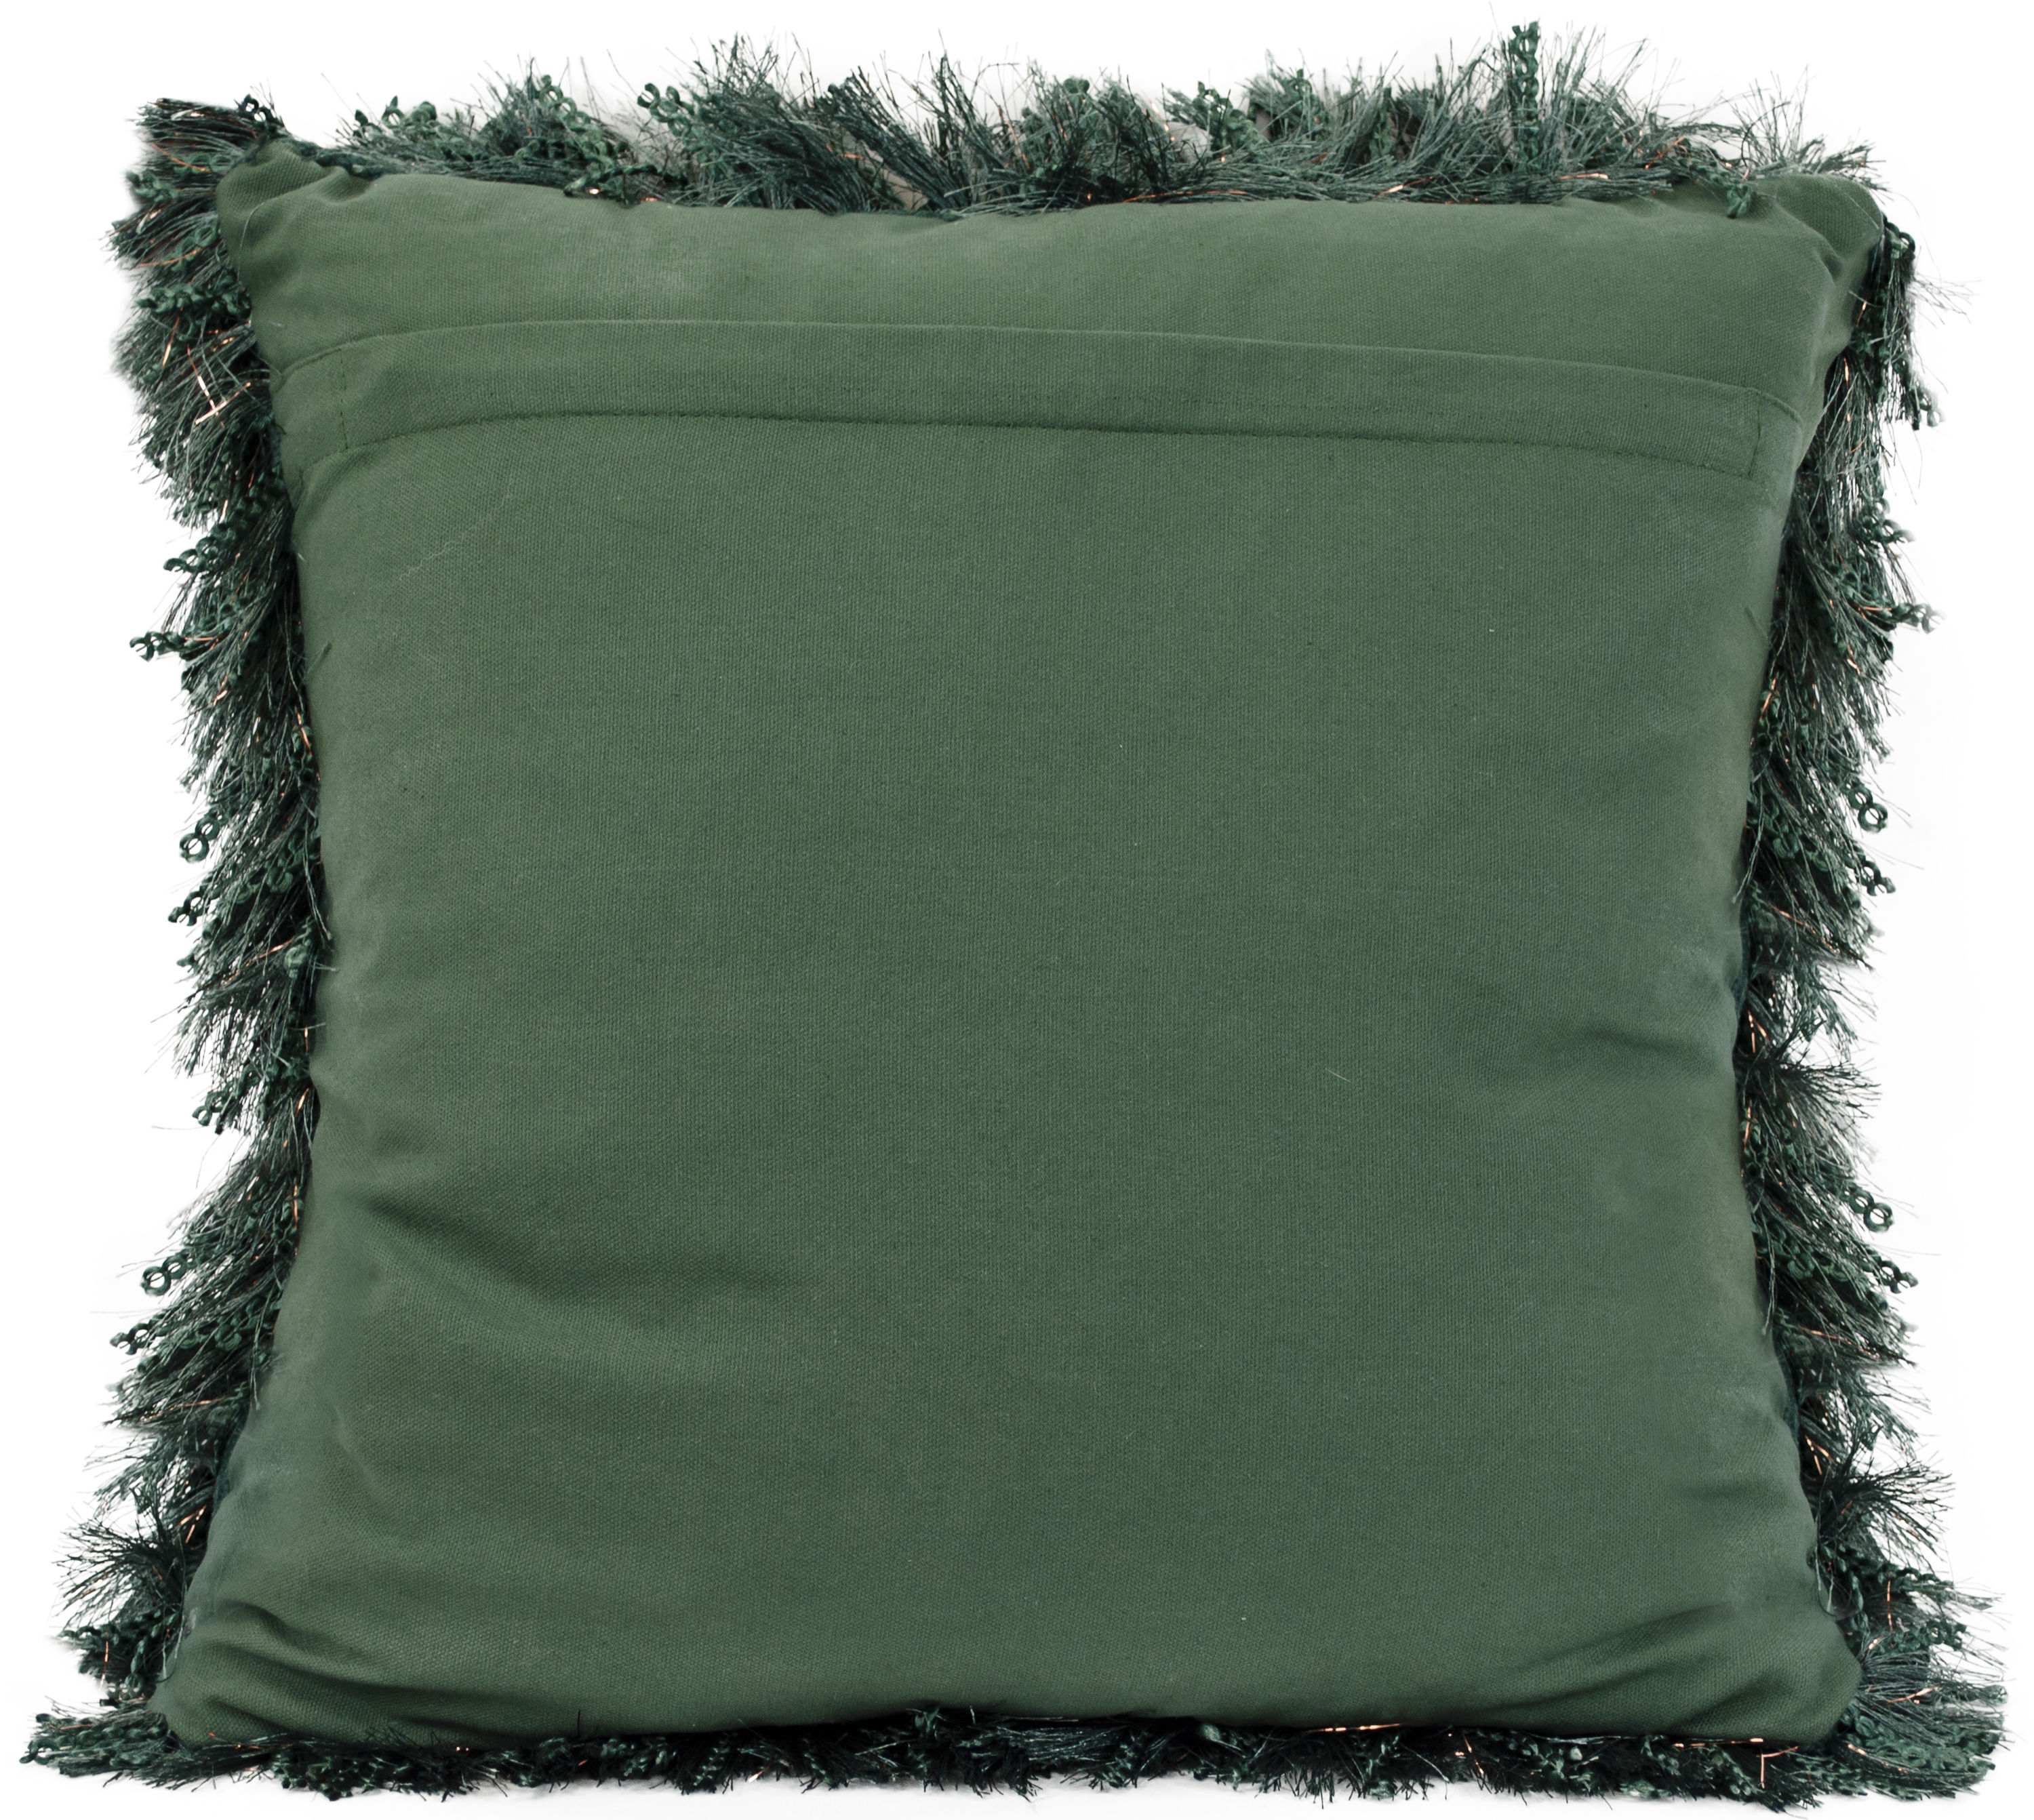 Urban Loft by Westex Shiny Shag Emerald Poly Filled Decorative Throw Pillow Cushion 20 x 20